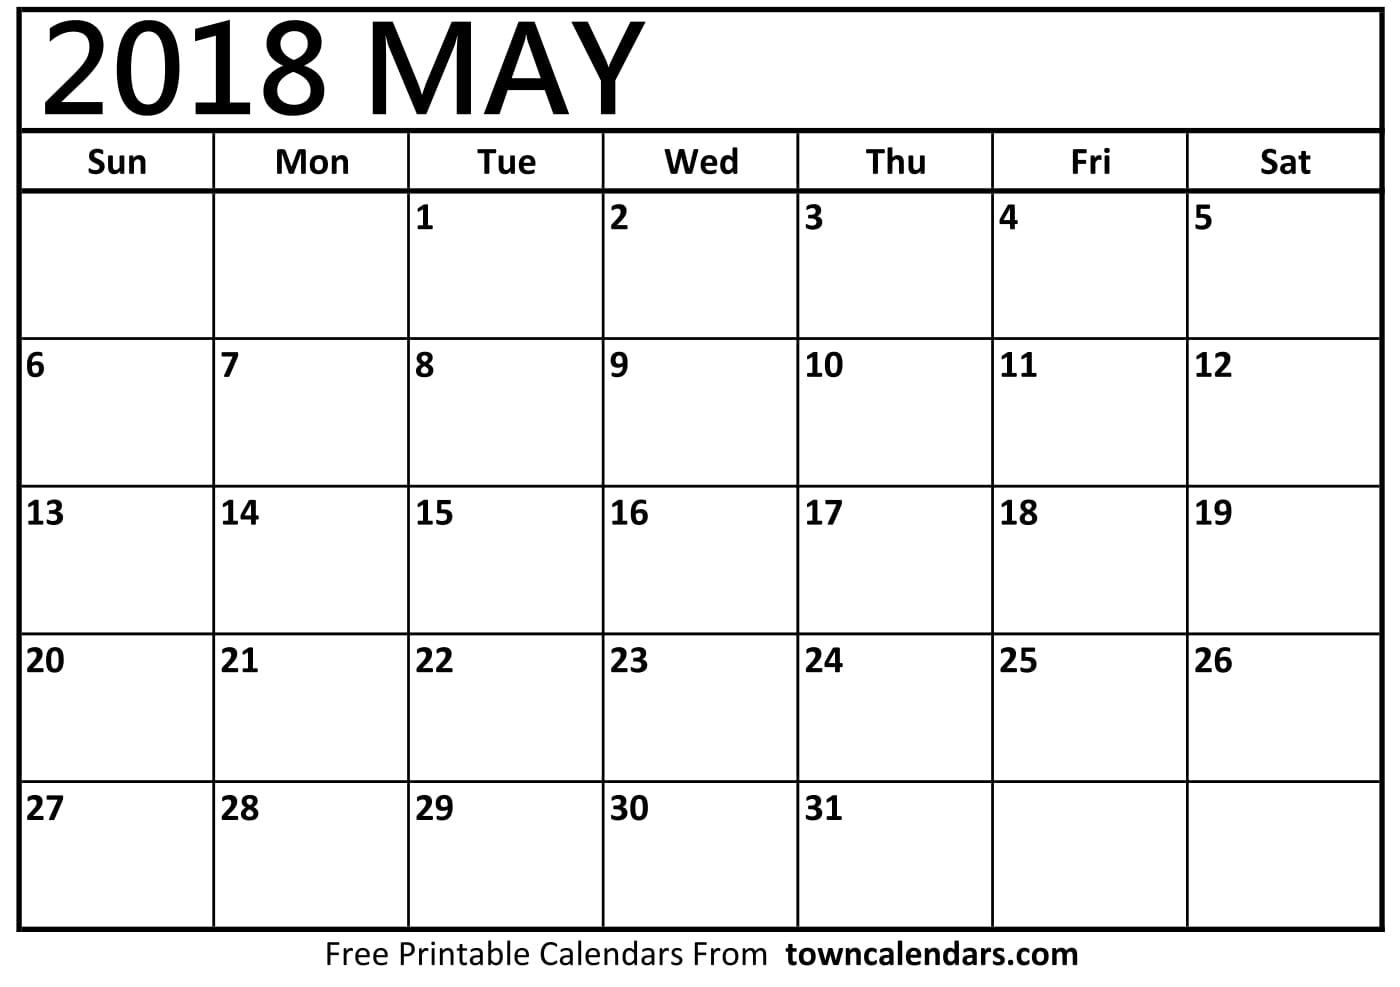 Printable May 2018 Calendar towncalendars com